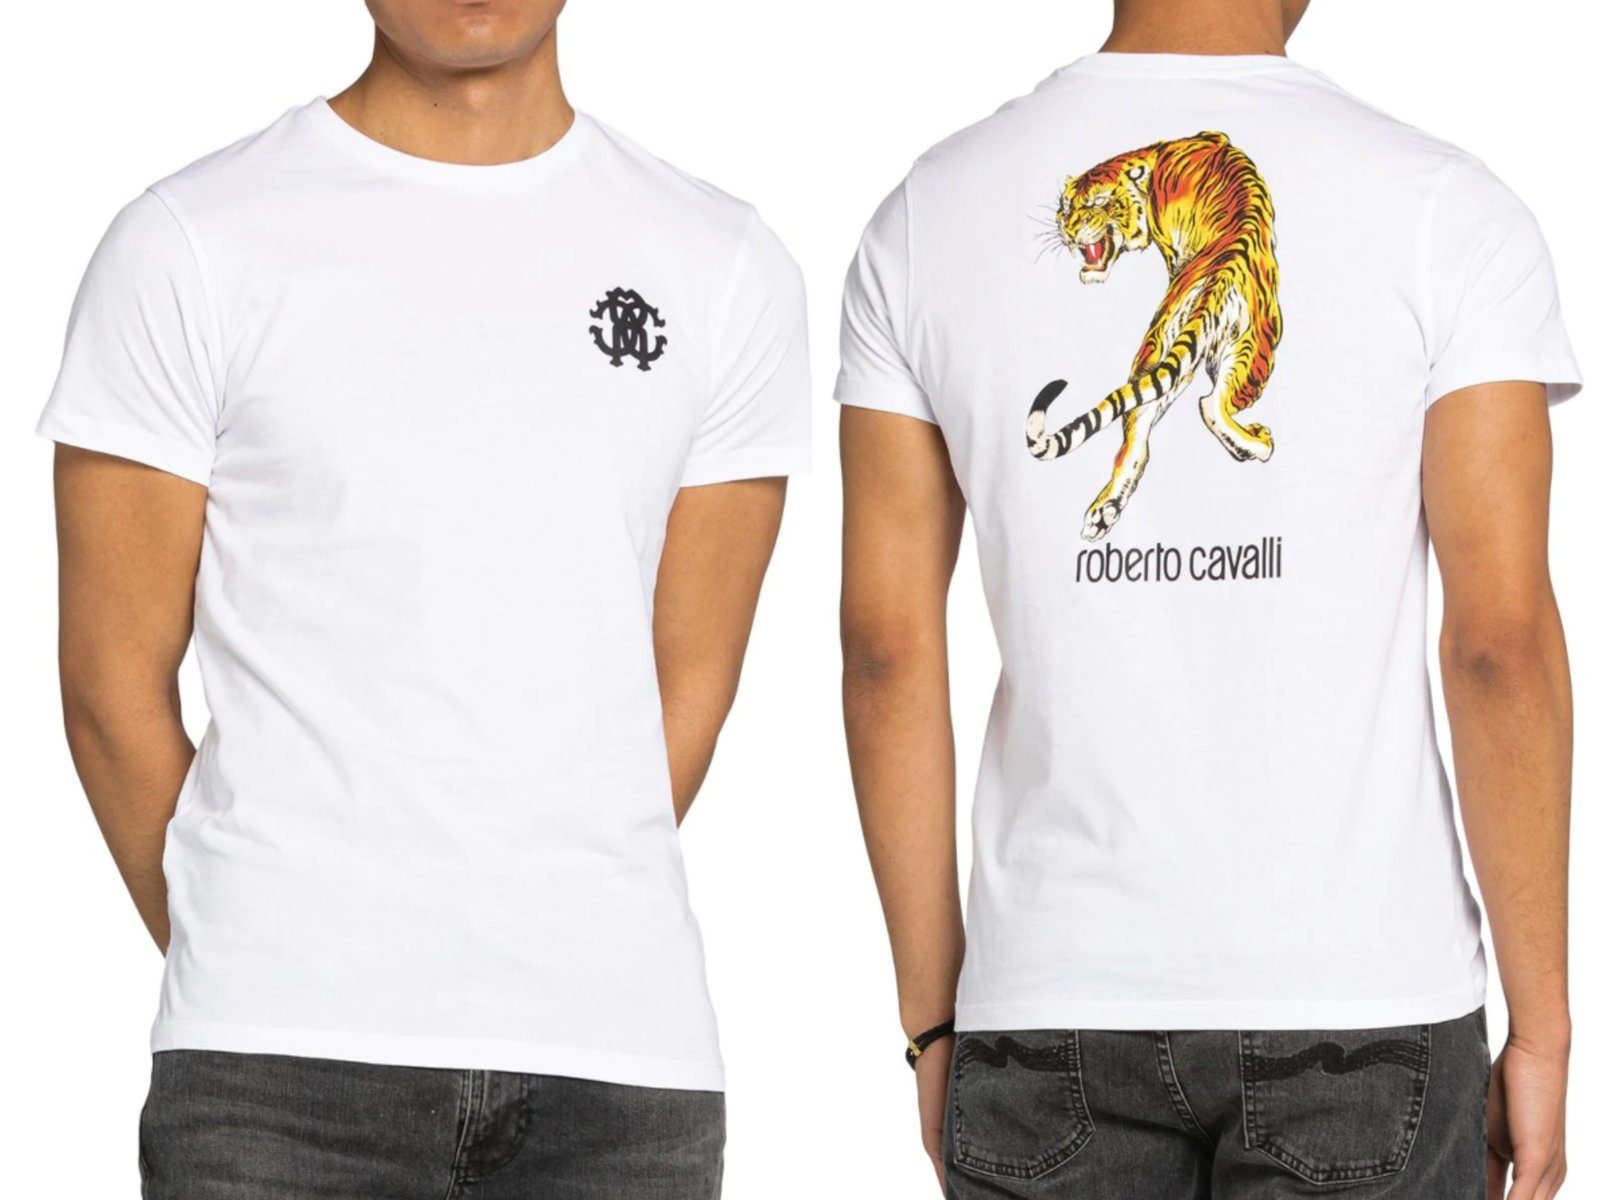 Print-Shirt Print CAVALLI Tiger T-shirt ROBERTO Luxury CLASS Logo Firenze